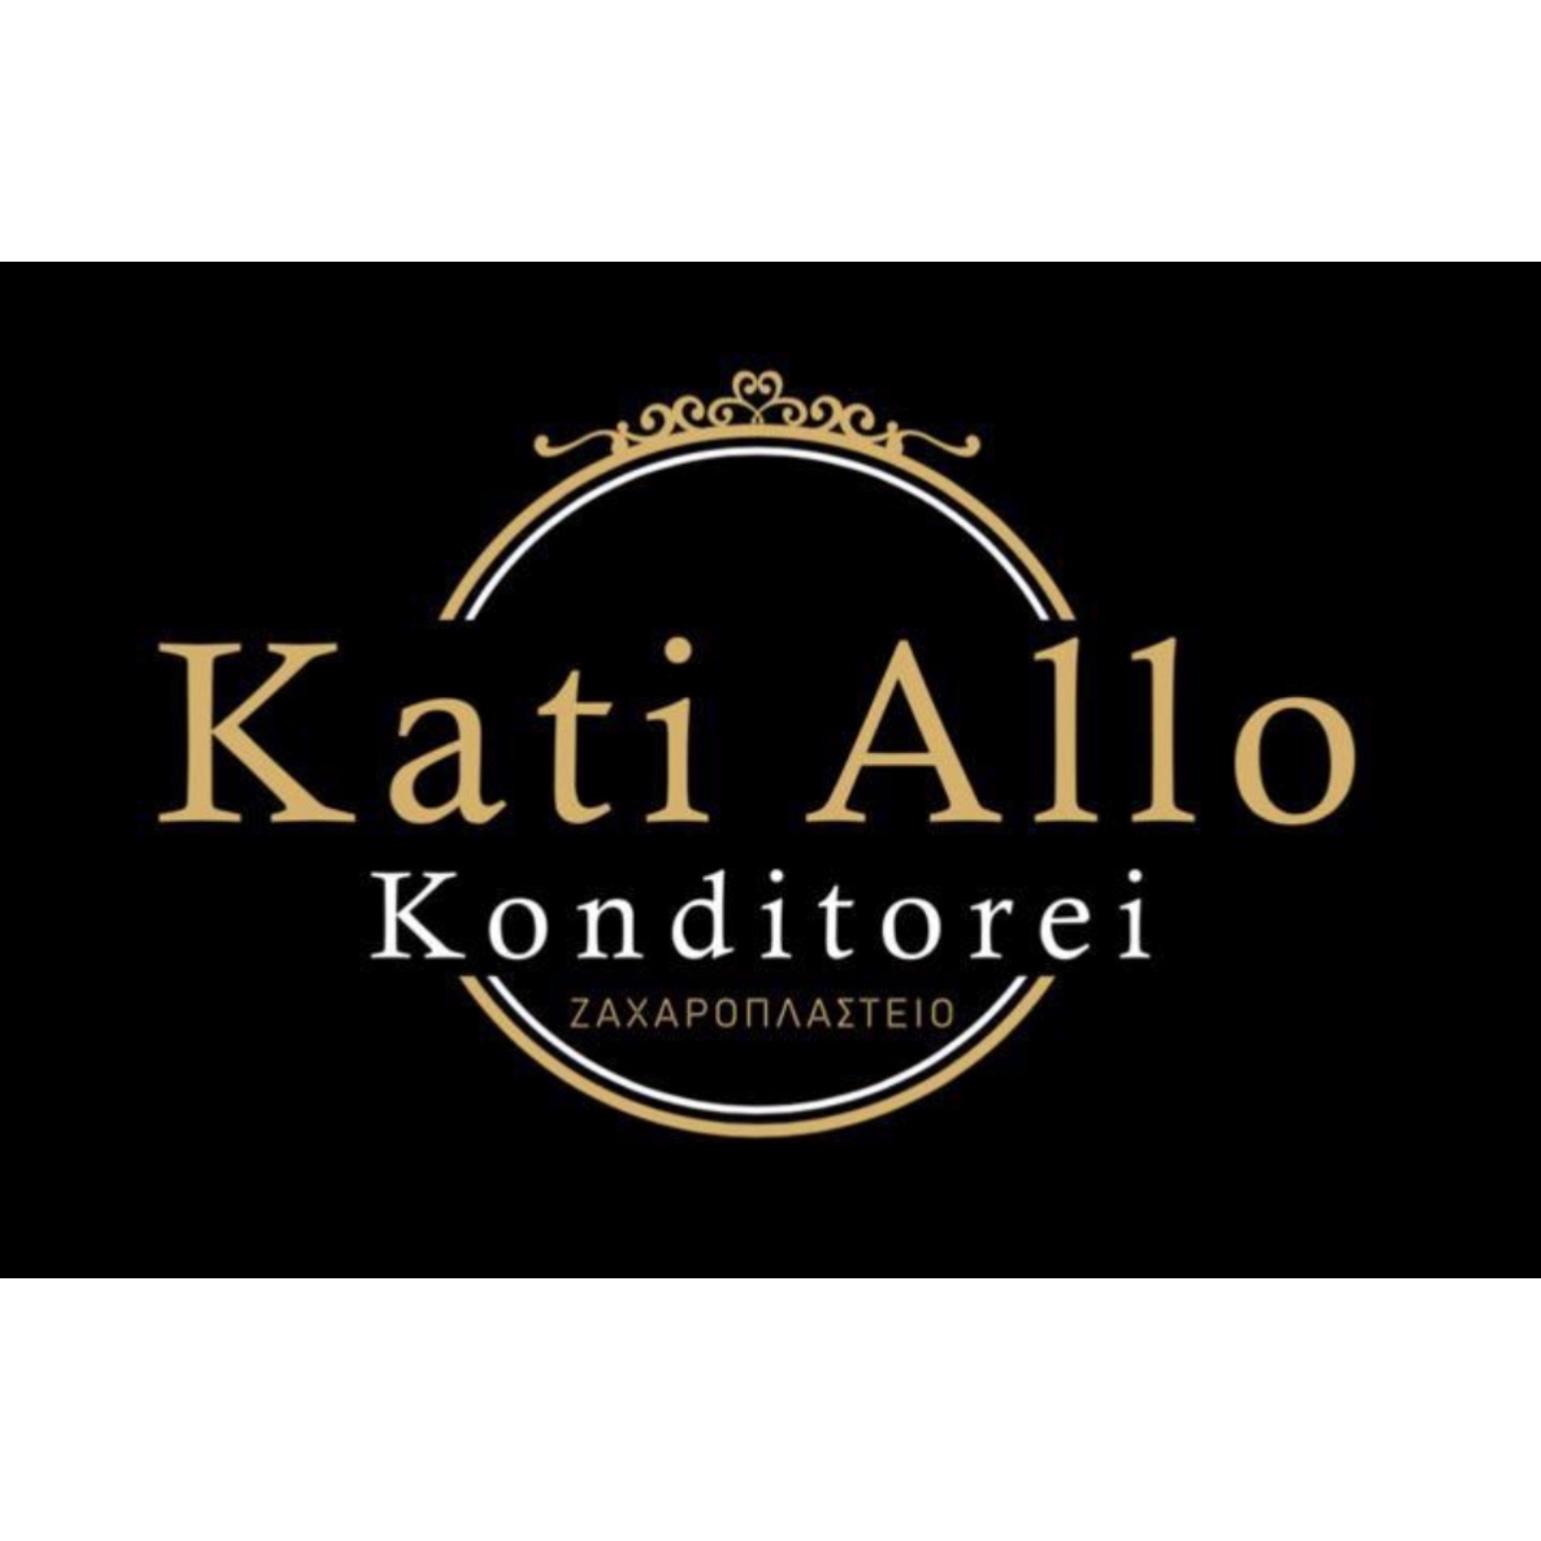 Konditorei Kati Allo in Gütersloh - Logo